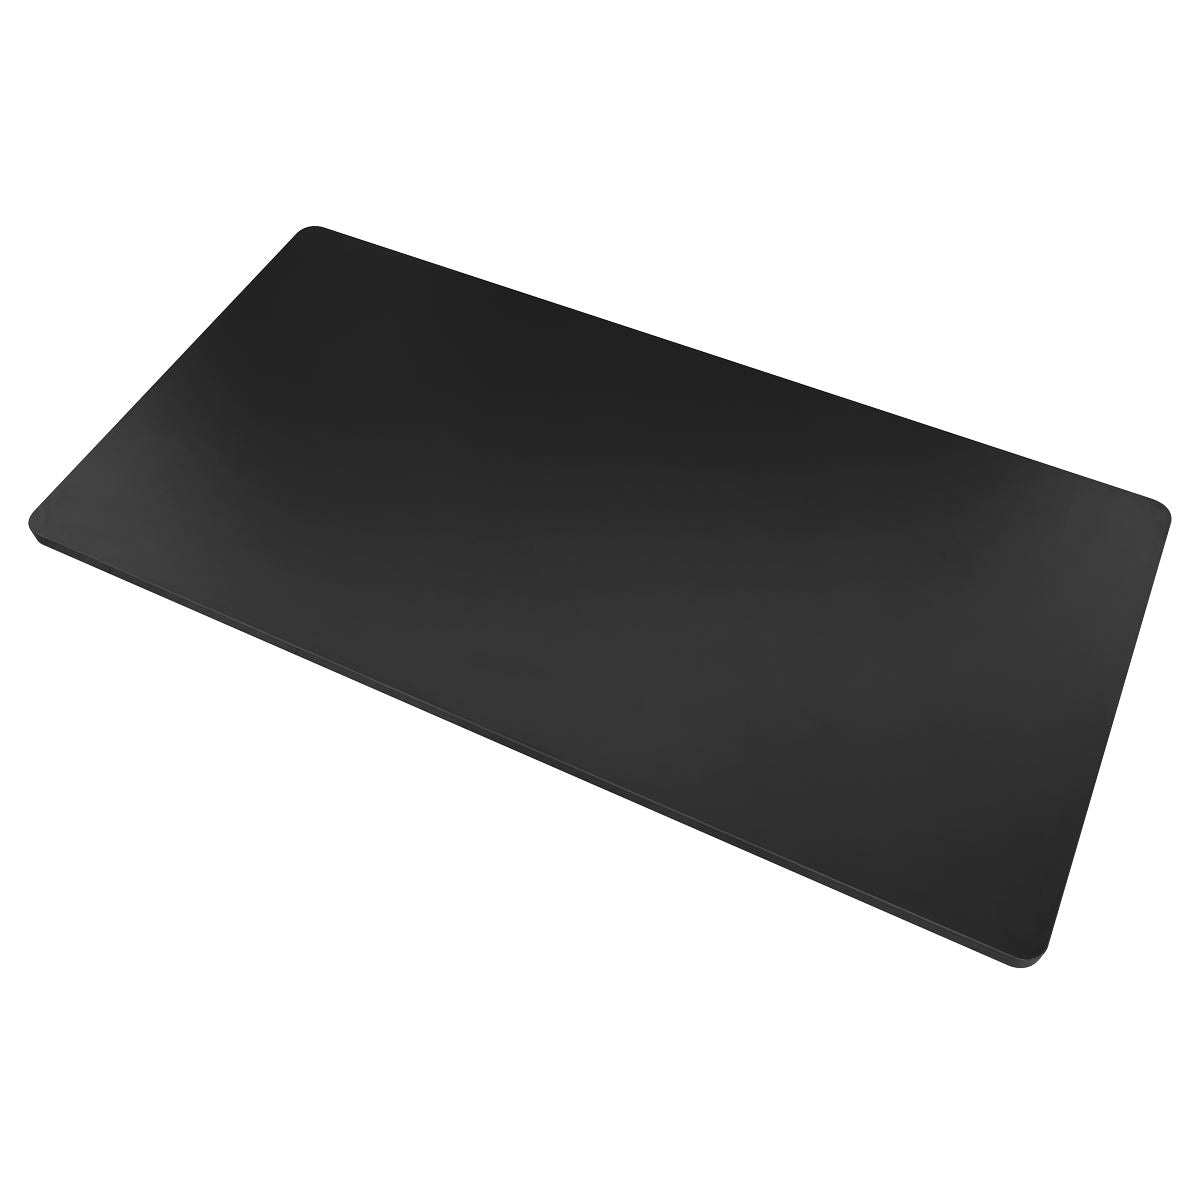 Dellonda Black Rectangular Desktop 1400 x 700mm, 1" Thickness - DH21